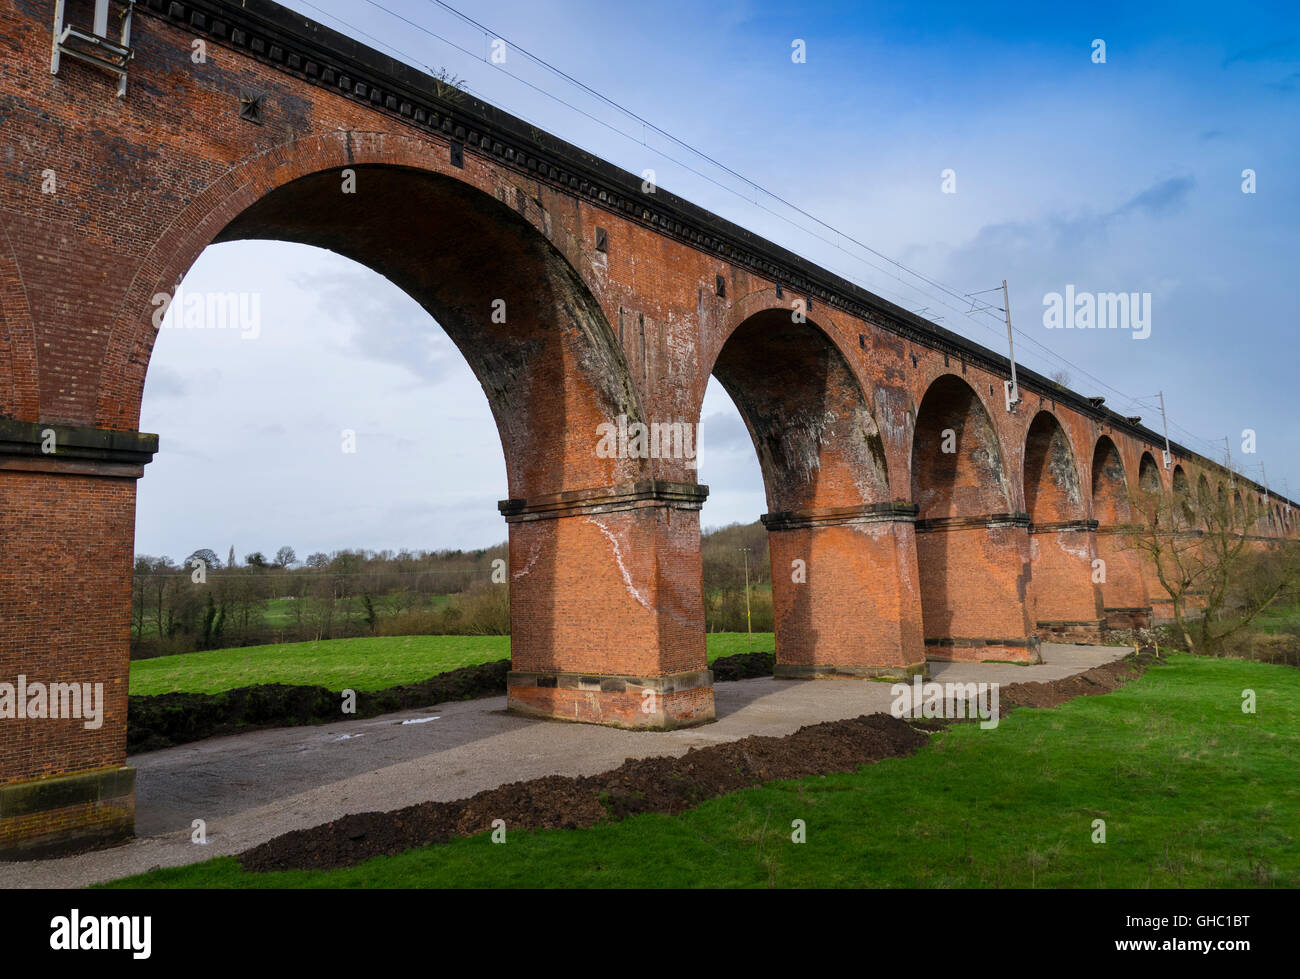 Twemlow railway viaduct, Cheshire, UK, near Holmes Chapel built in 1841 crossing the river Dane Stock Photo